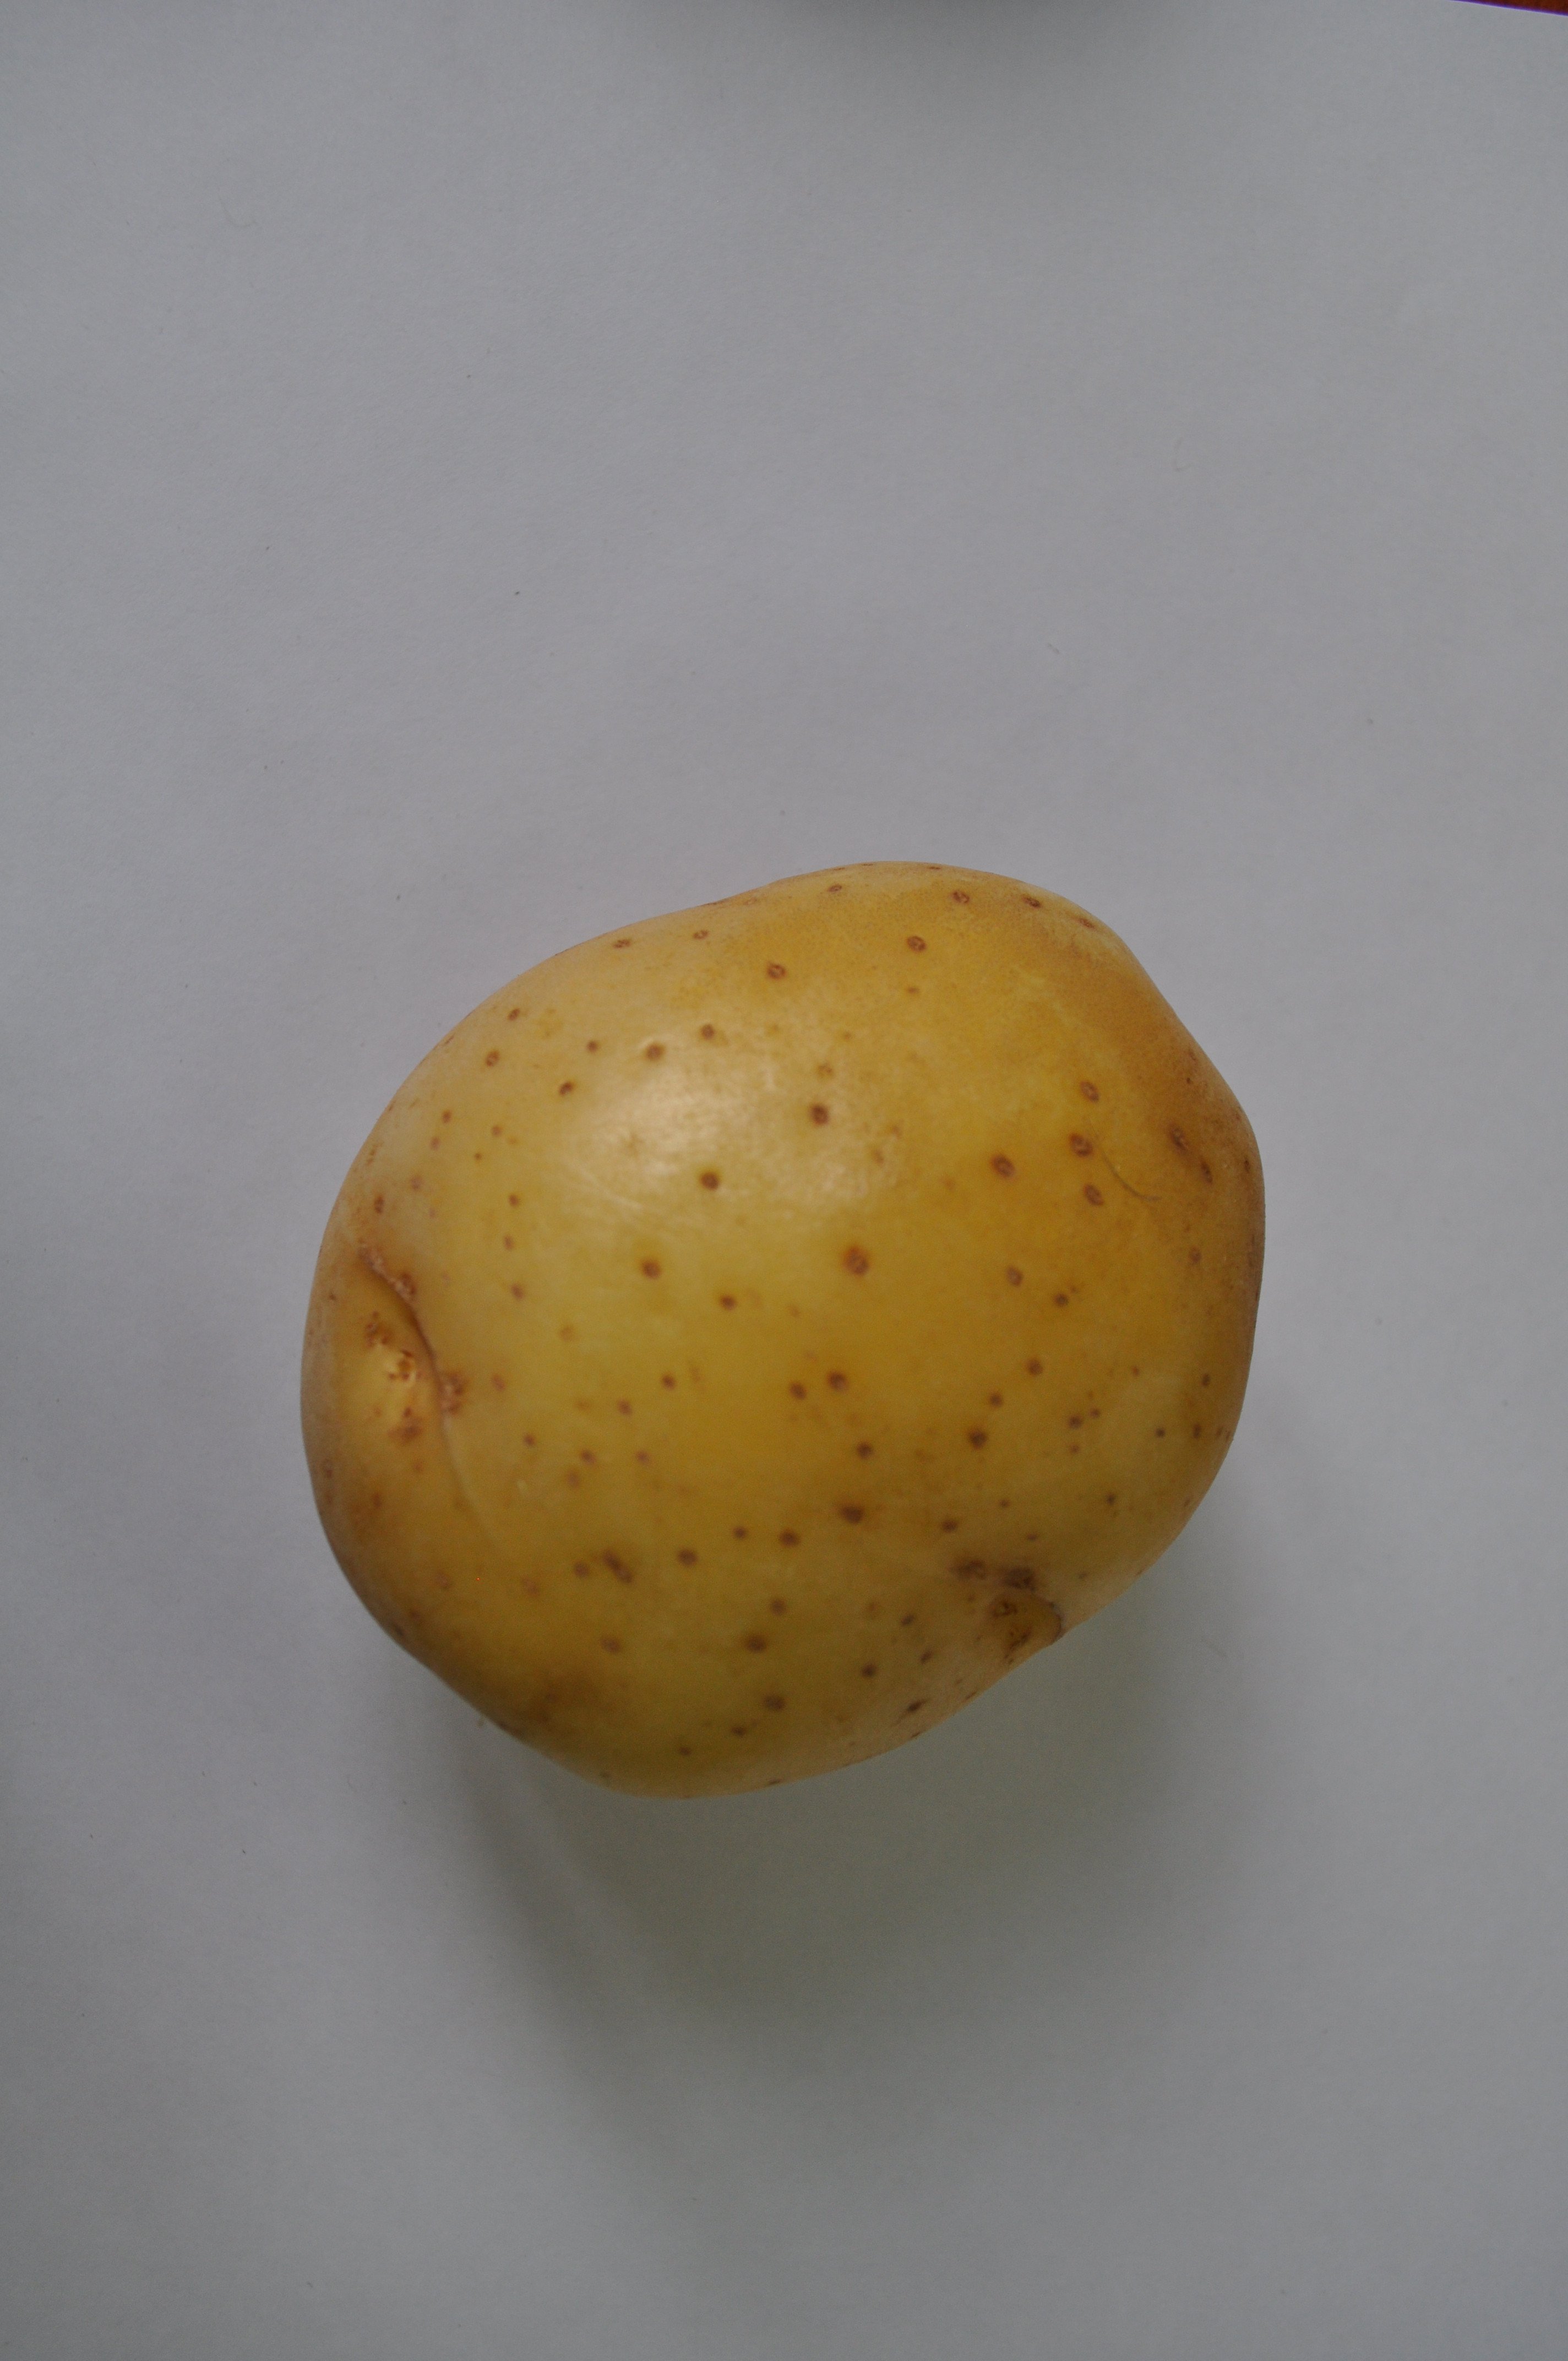 Джелли картофель характеристика отзывы. Картофель Молли. Сорт Молли картофель. Сорт картофеля Молли Юнга. Картофель Молли характеристика сорта.